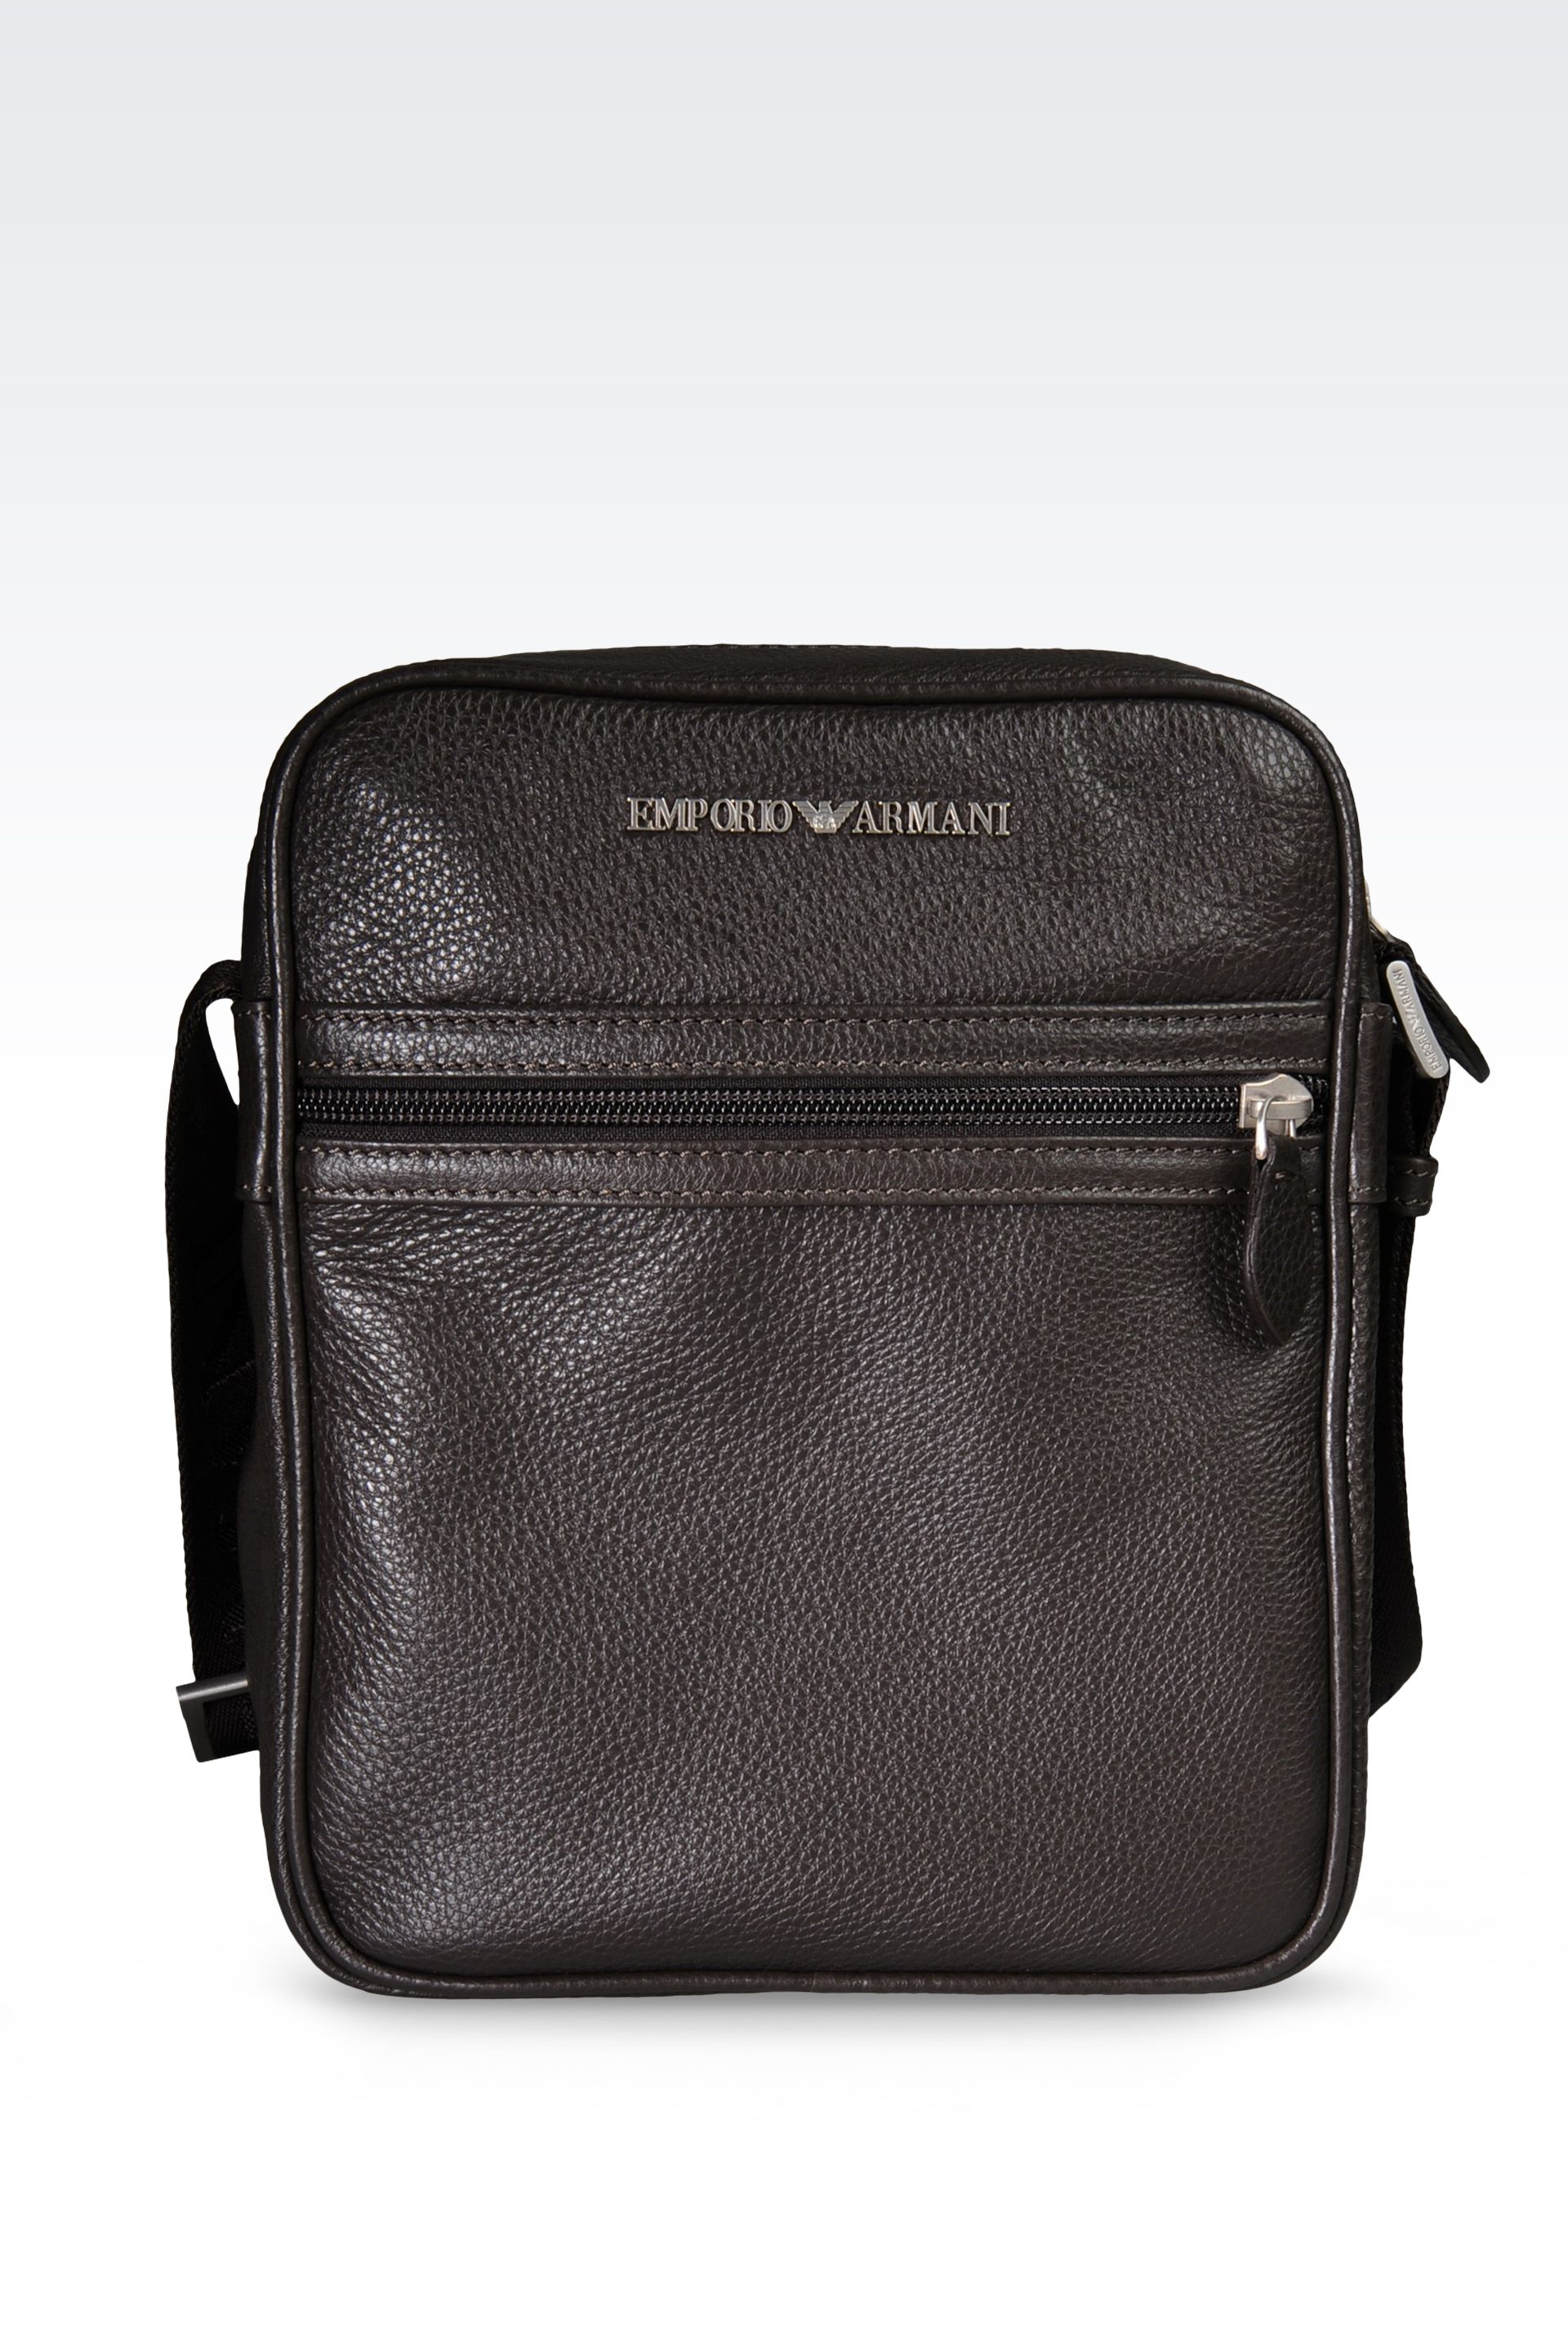 Emporio Armani Shoulder Bag In Tumbled Calfskin in Dark Brown (Brown ...